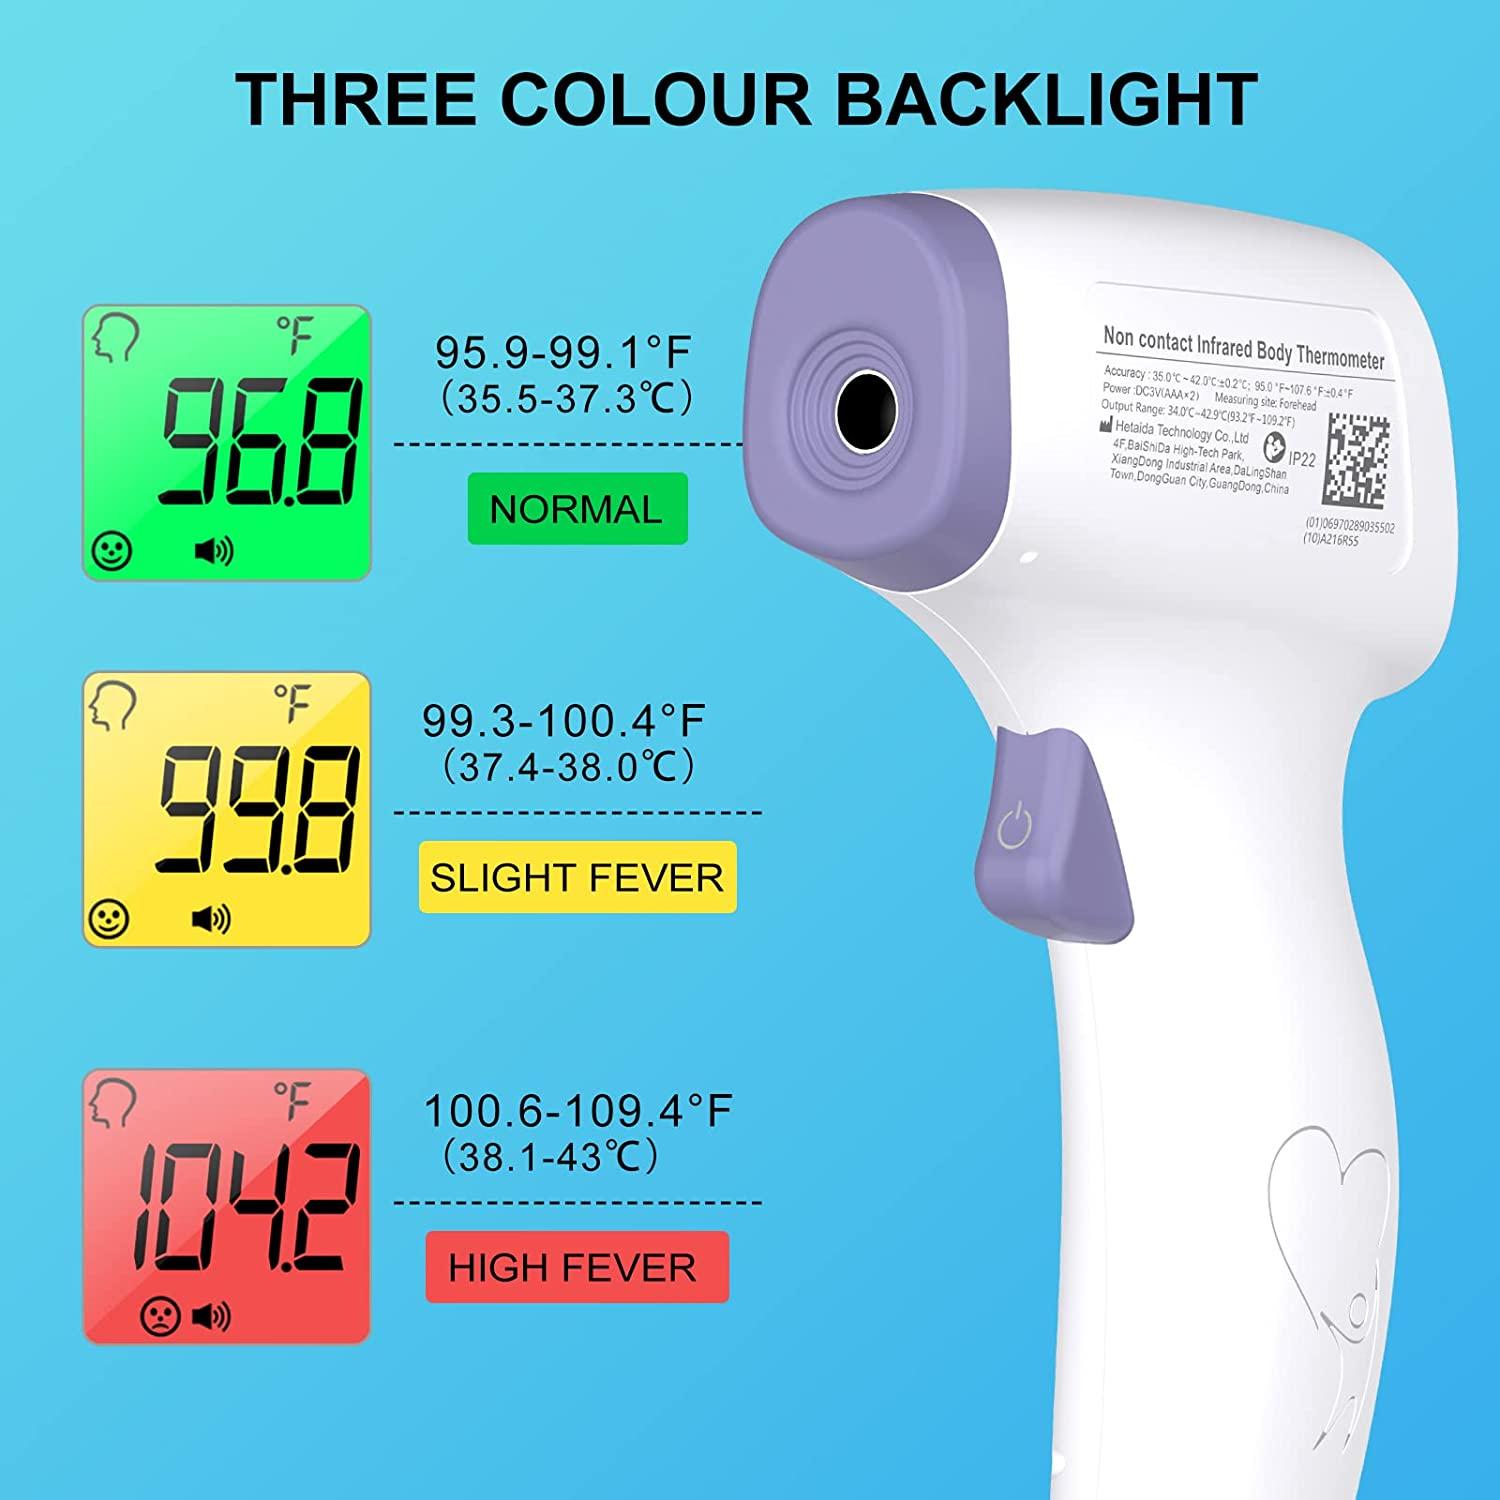 Revitalife Infrared Non-Contact Thermometer - Purple